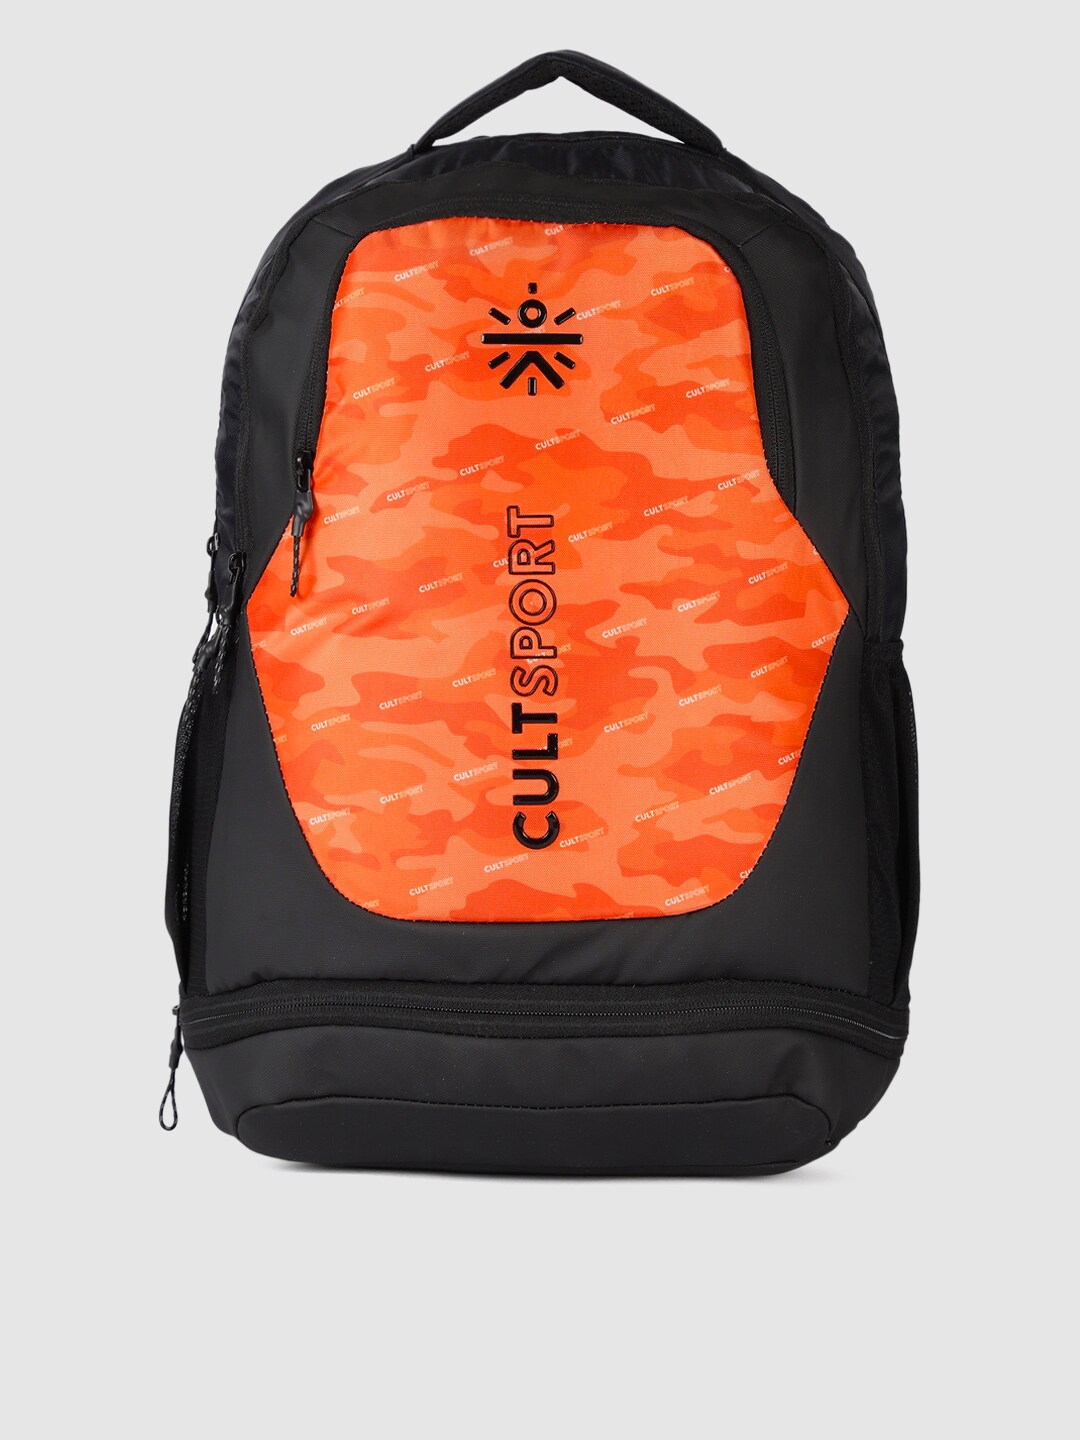 Cultsport Unisex Orange & Black Colourblocked Backpack Price in India